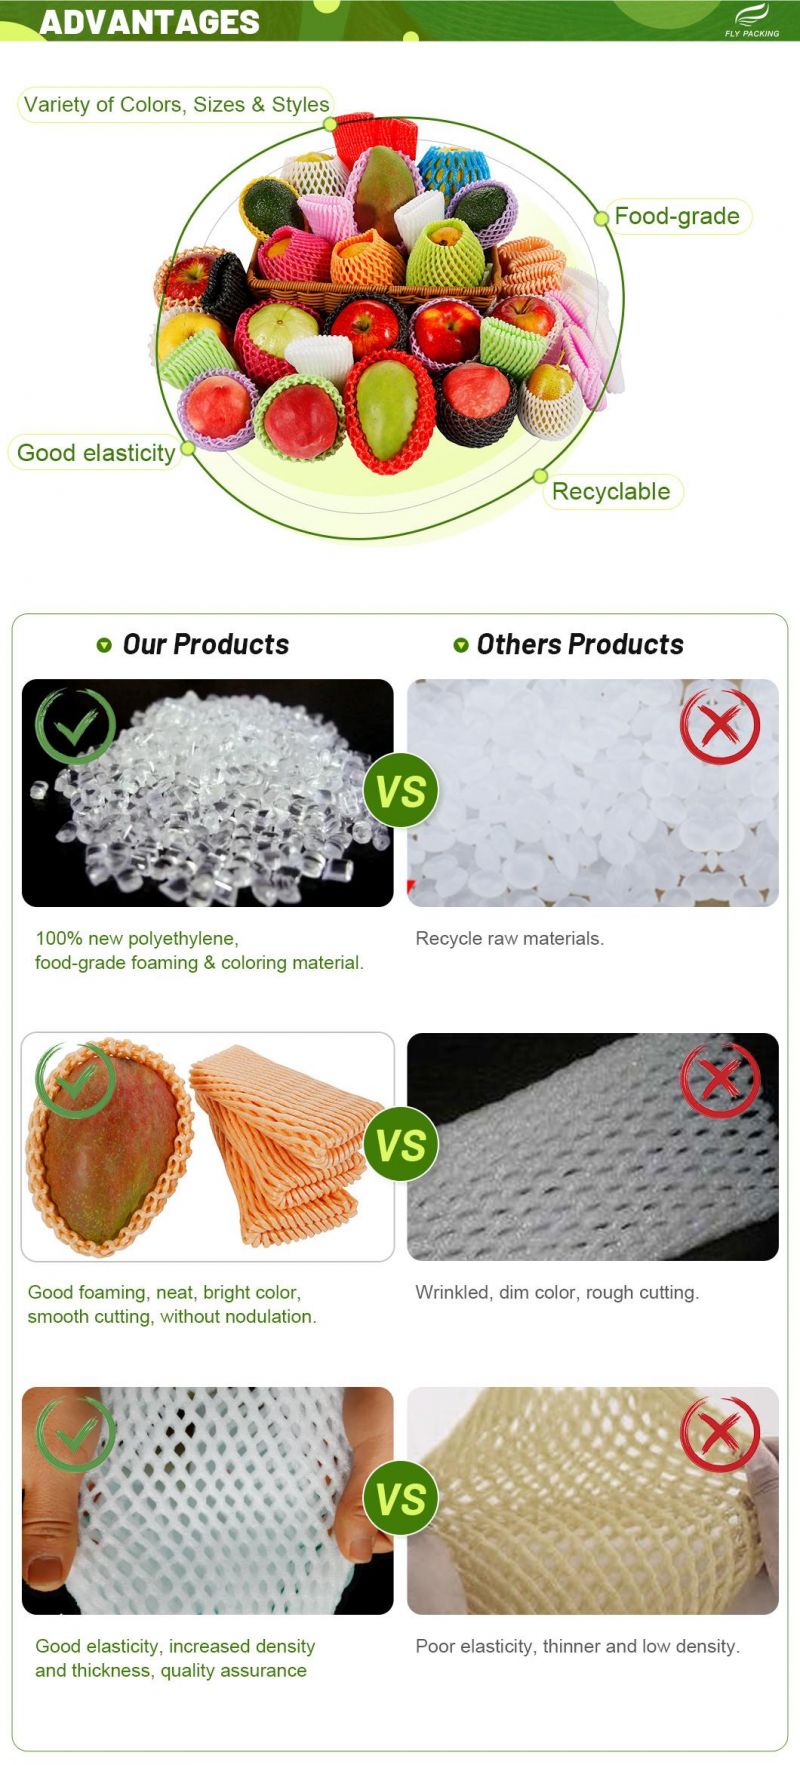 Wholesale High Quality Food Grade Fruit Protection Foam Net